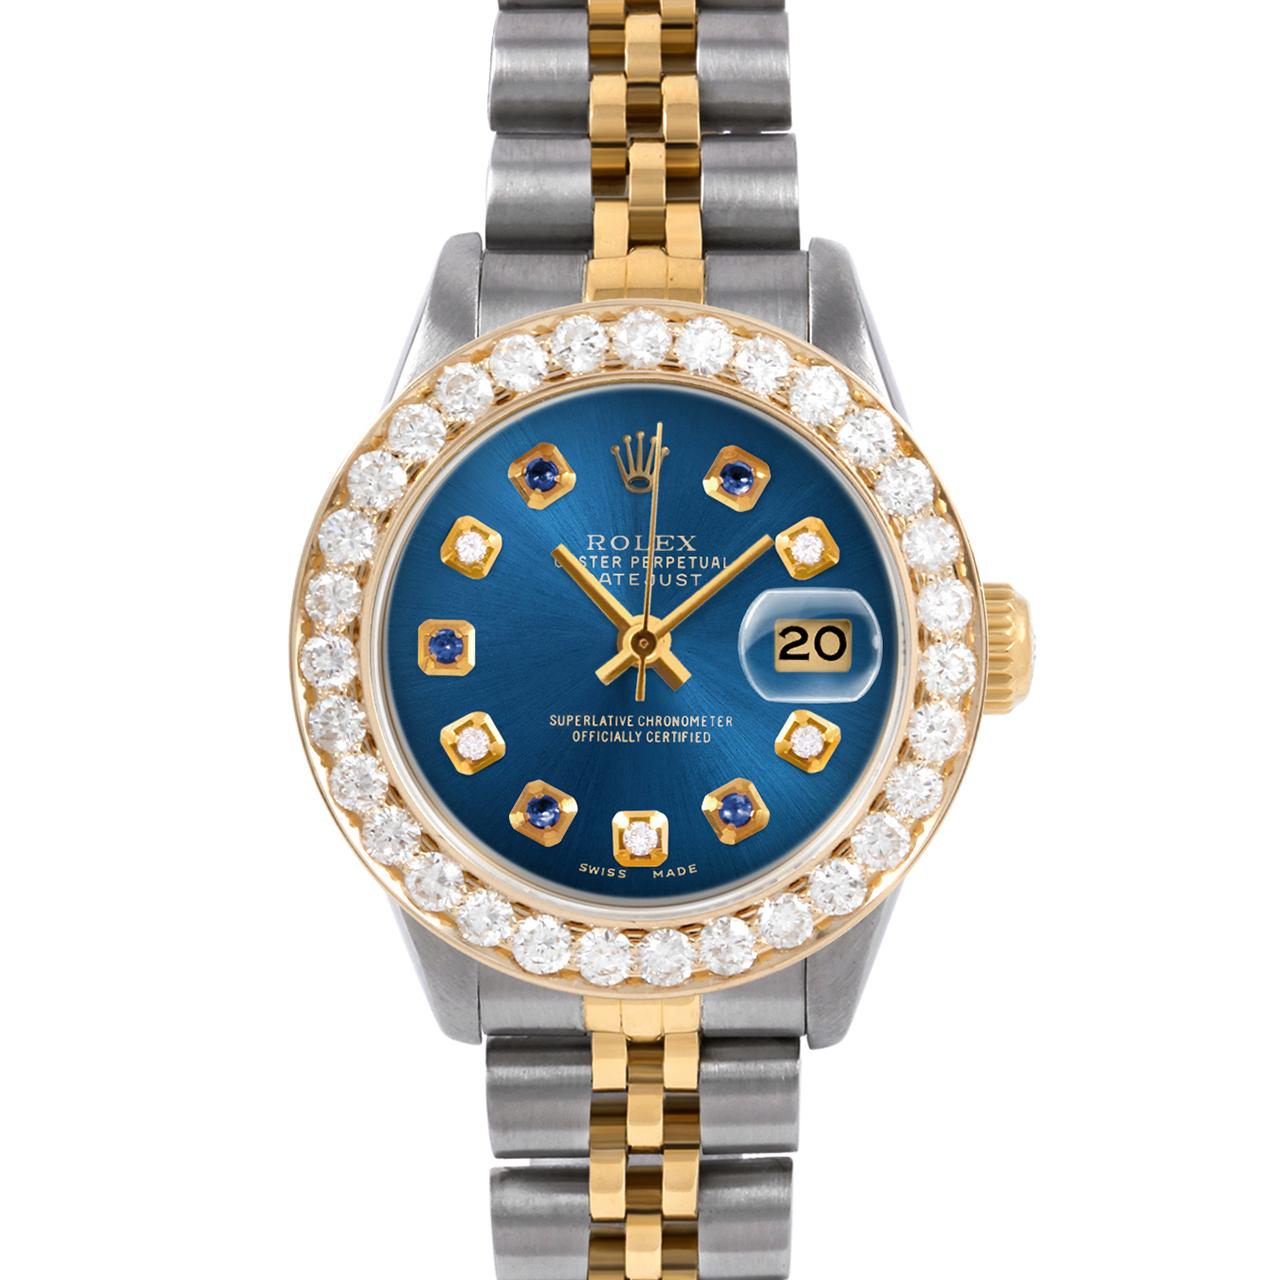 Swiss Wrist - SKU 6917-TT-BLU-DIA-AM-2CT-JBL

Brand : Rolex
Model : Datejust (Non-Quickset Model)
Gender : Ladies
Metals : 14K/Stainless Steel
Case Size : 26 mm

Dial : Custom Blue Sapphire Diamond Dial (This dial is not original Rolex And has been